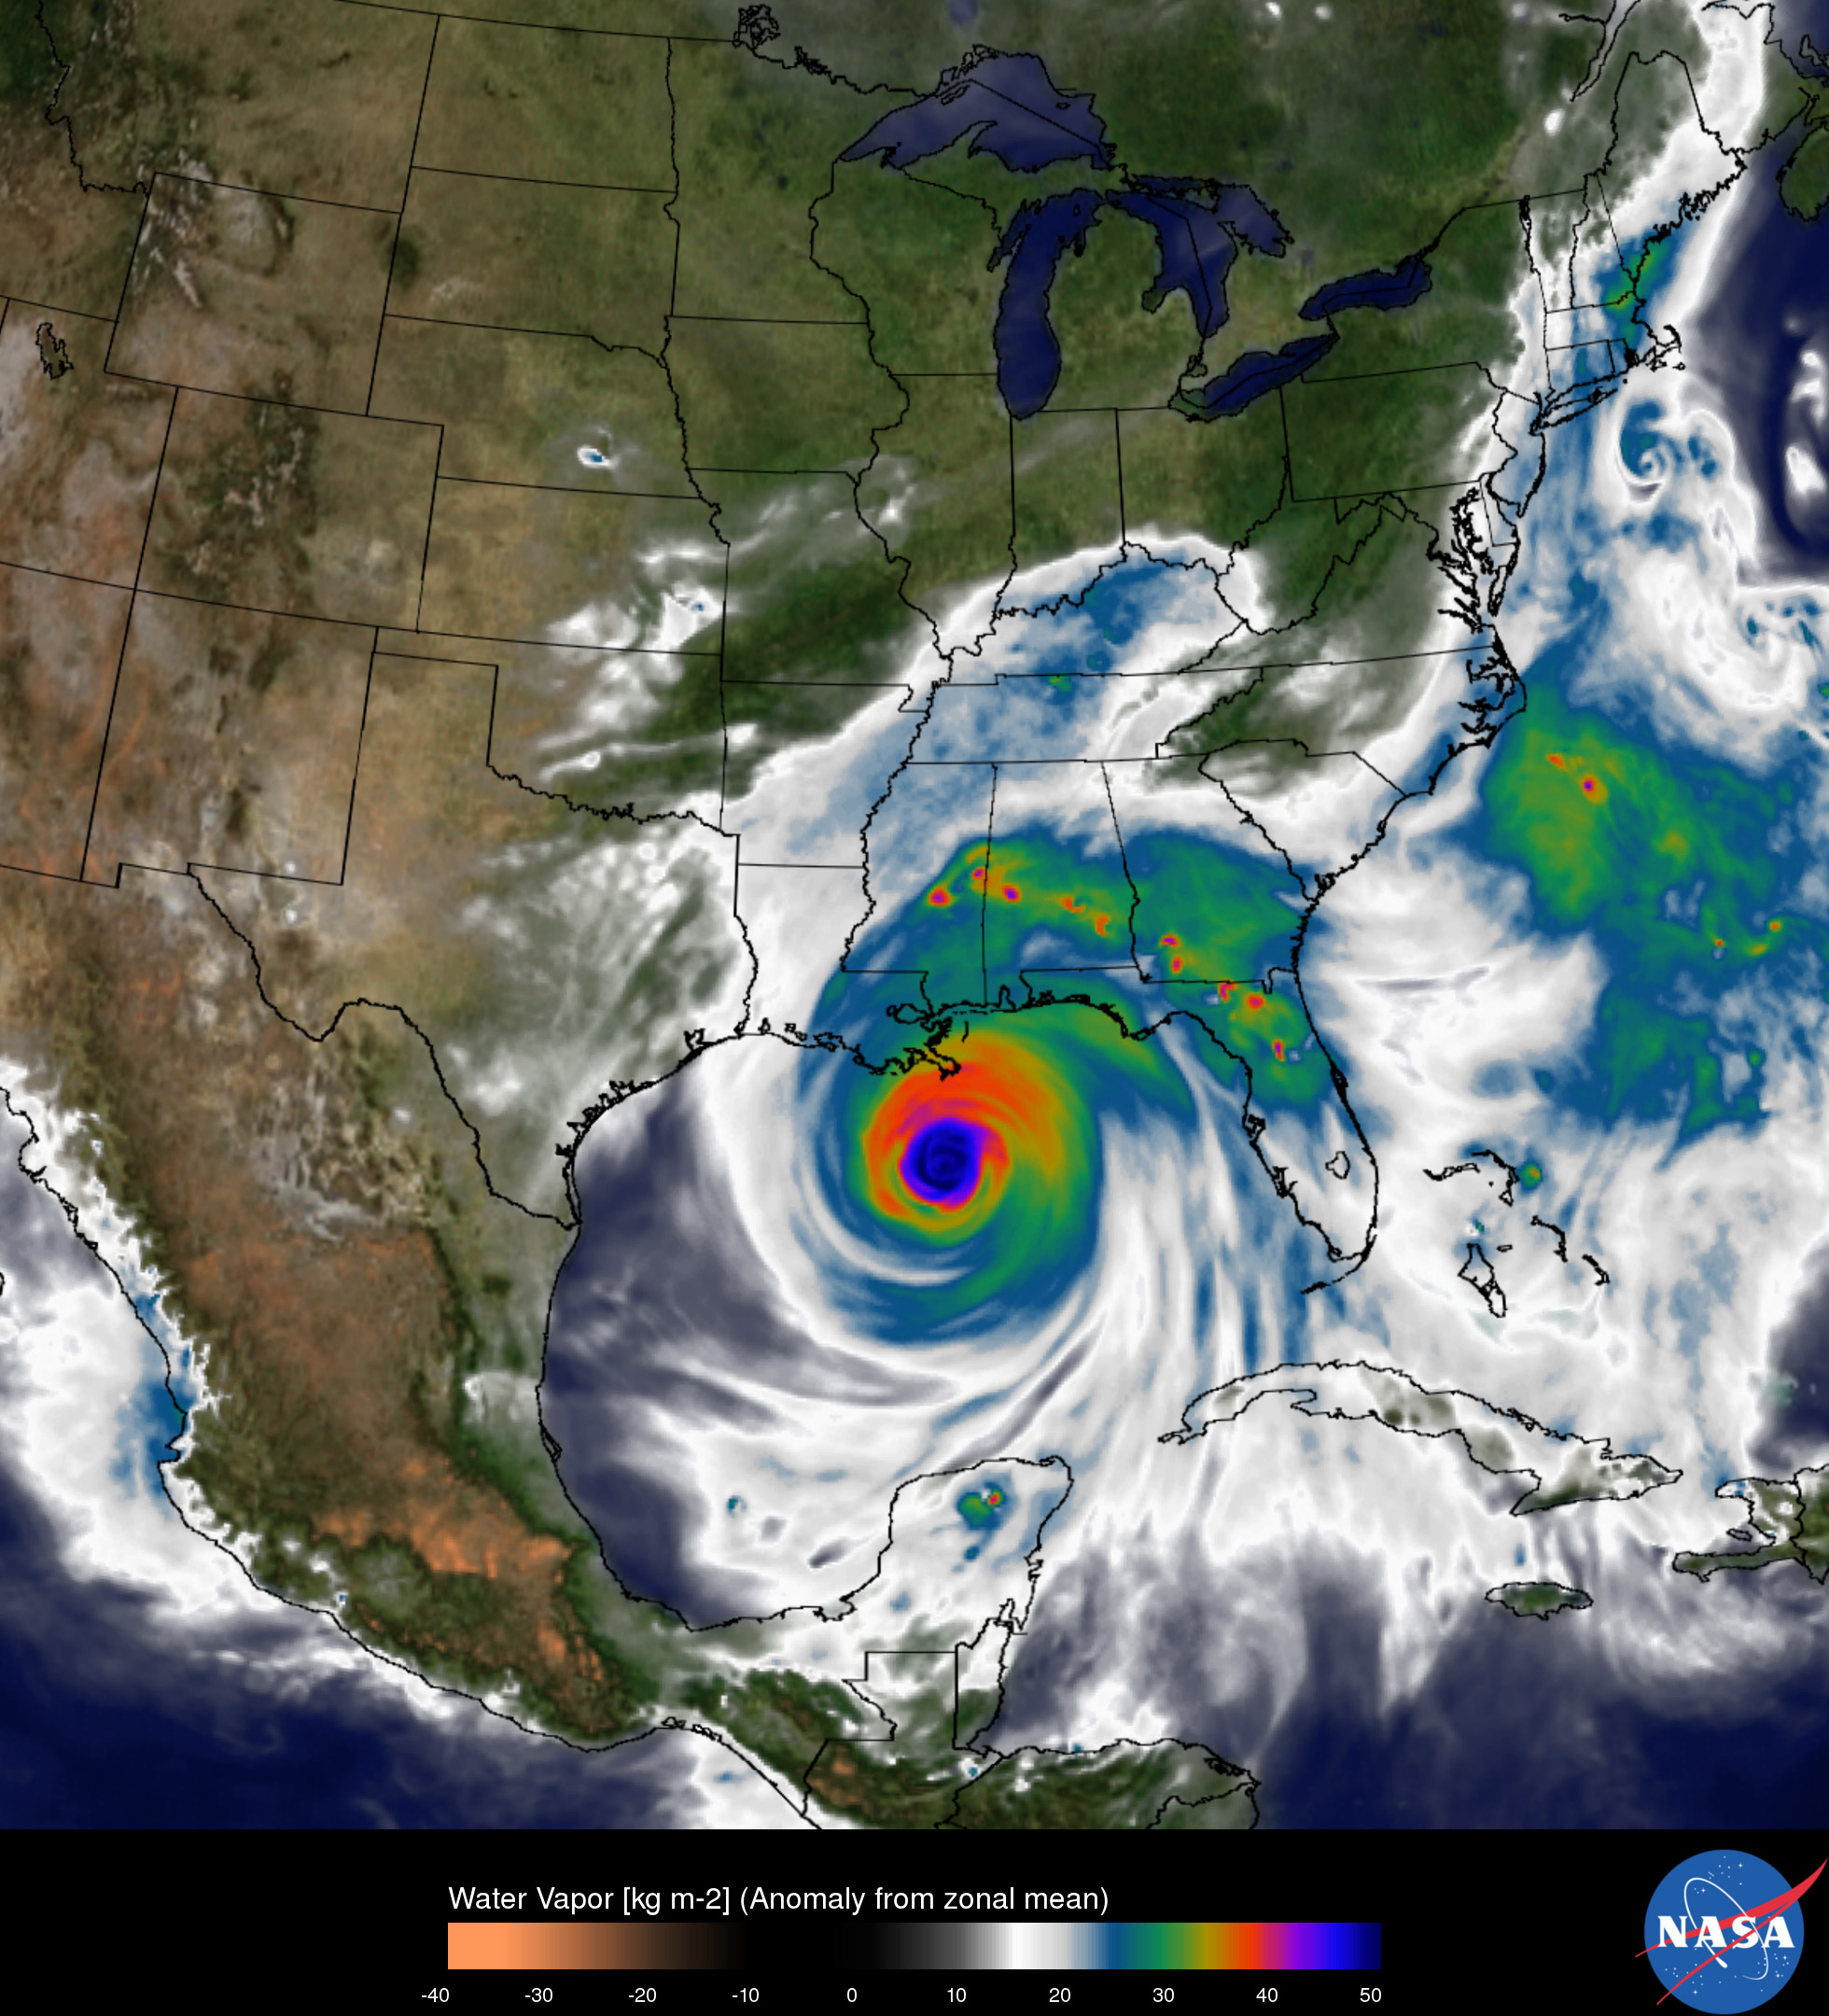 Since Katrina: NASA Advances Storm Models, Science | NASA